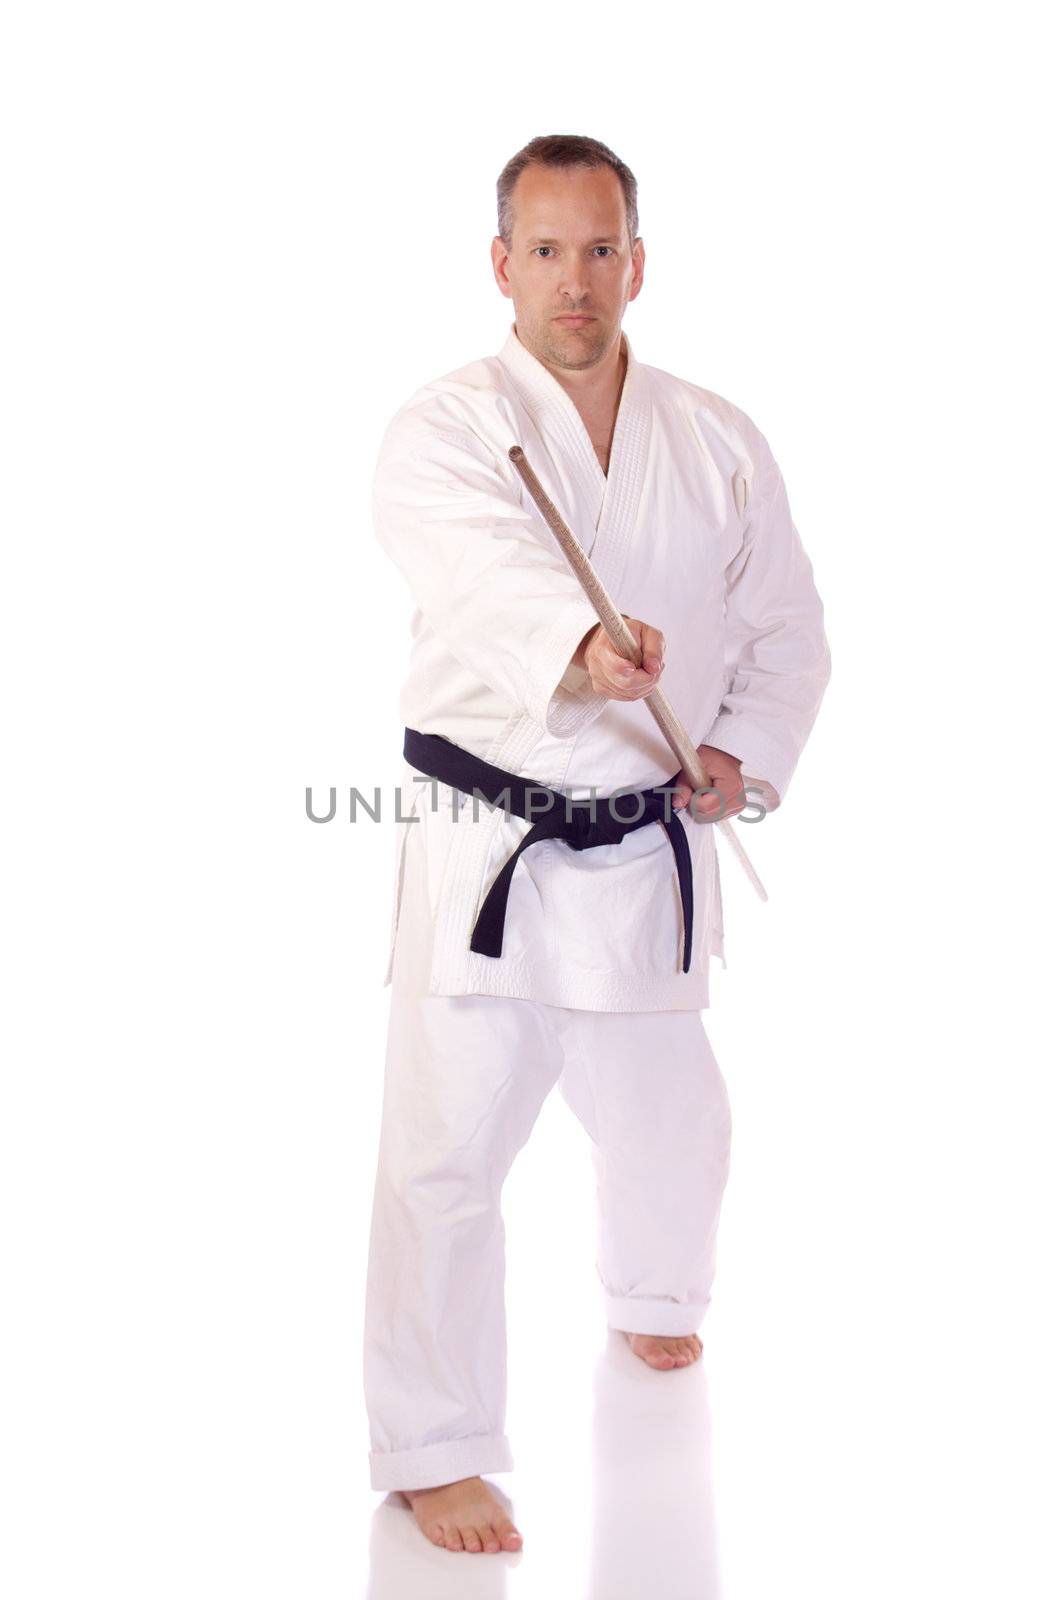 Man in karate-gi holding a bo staff